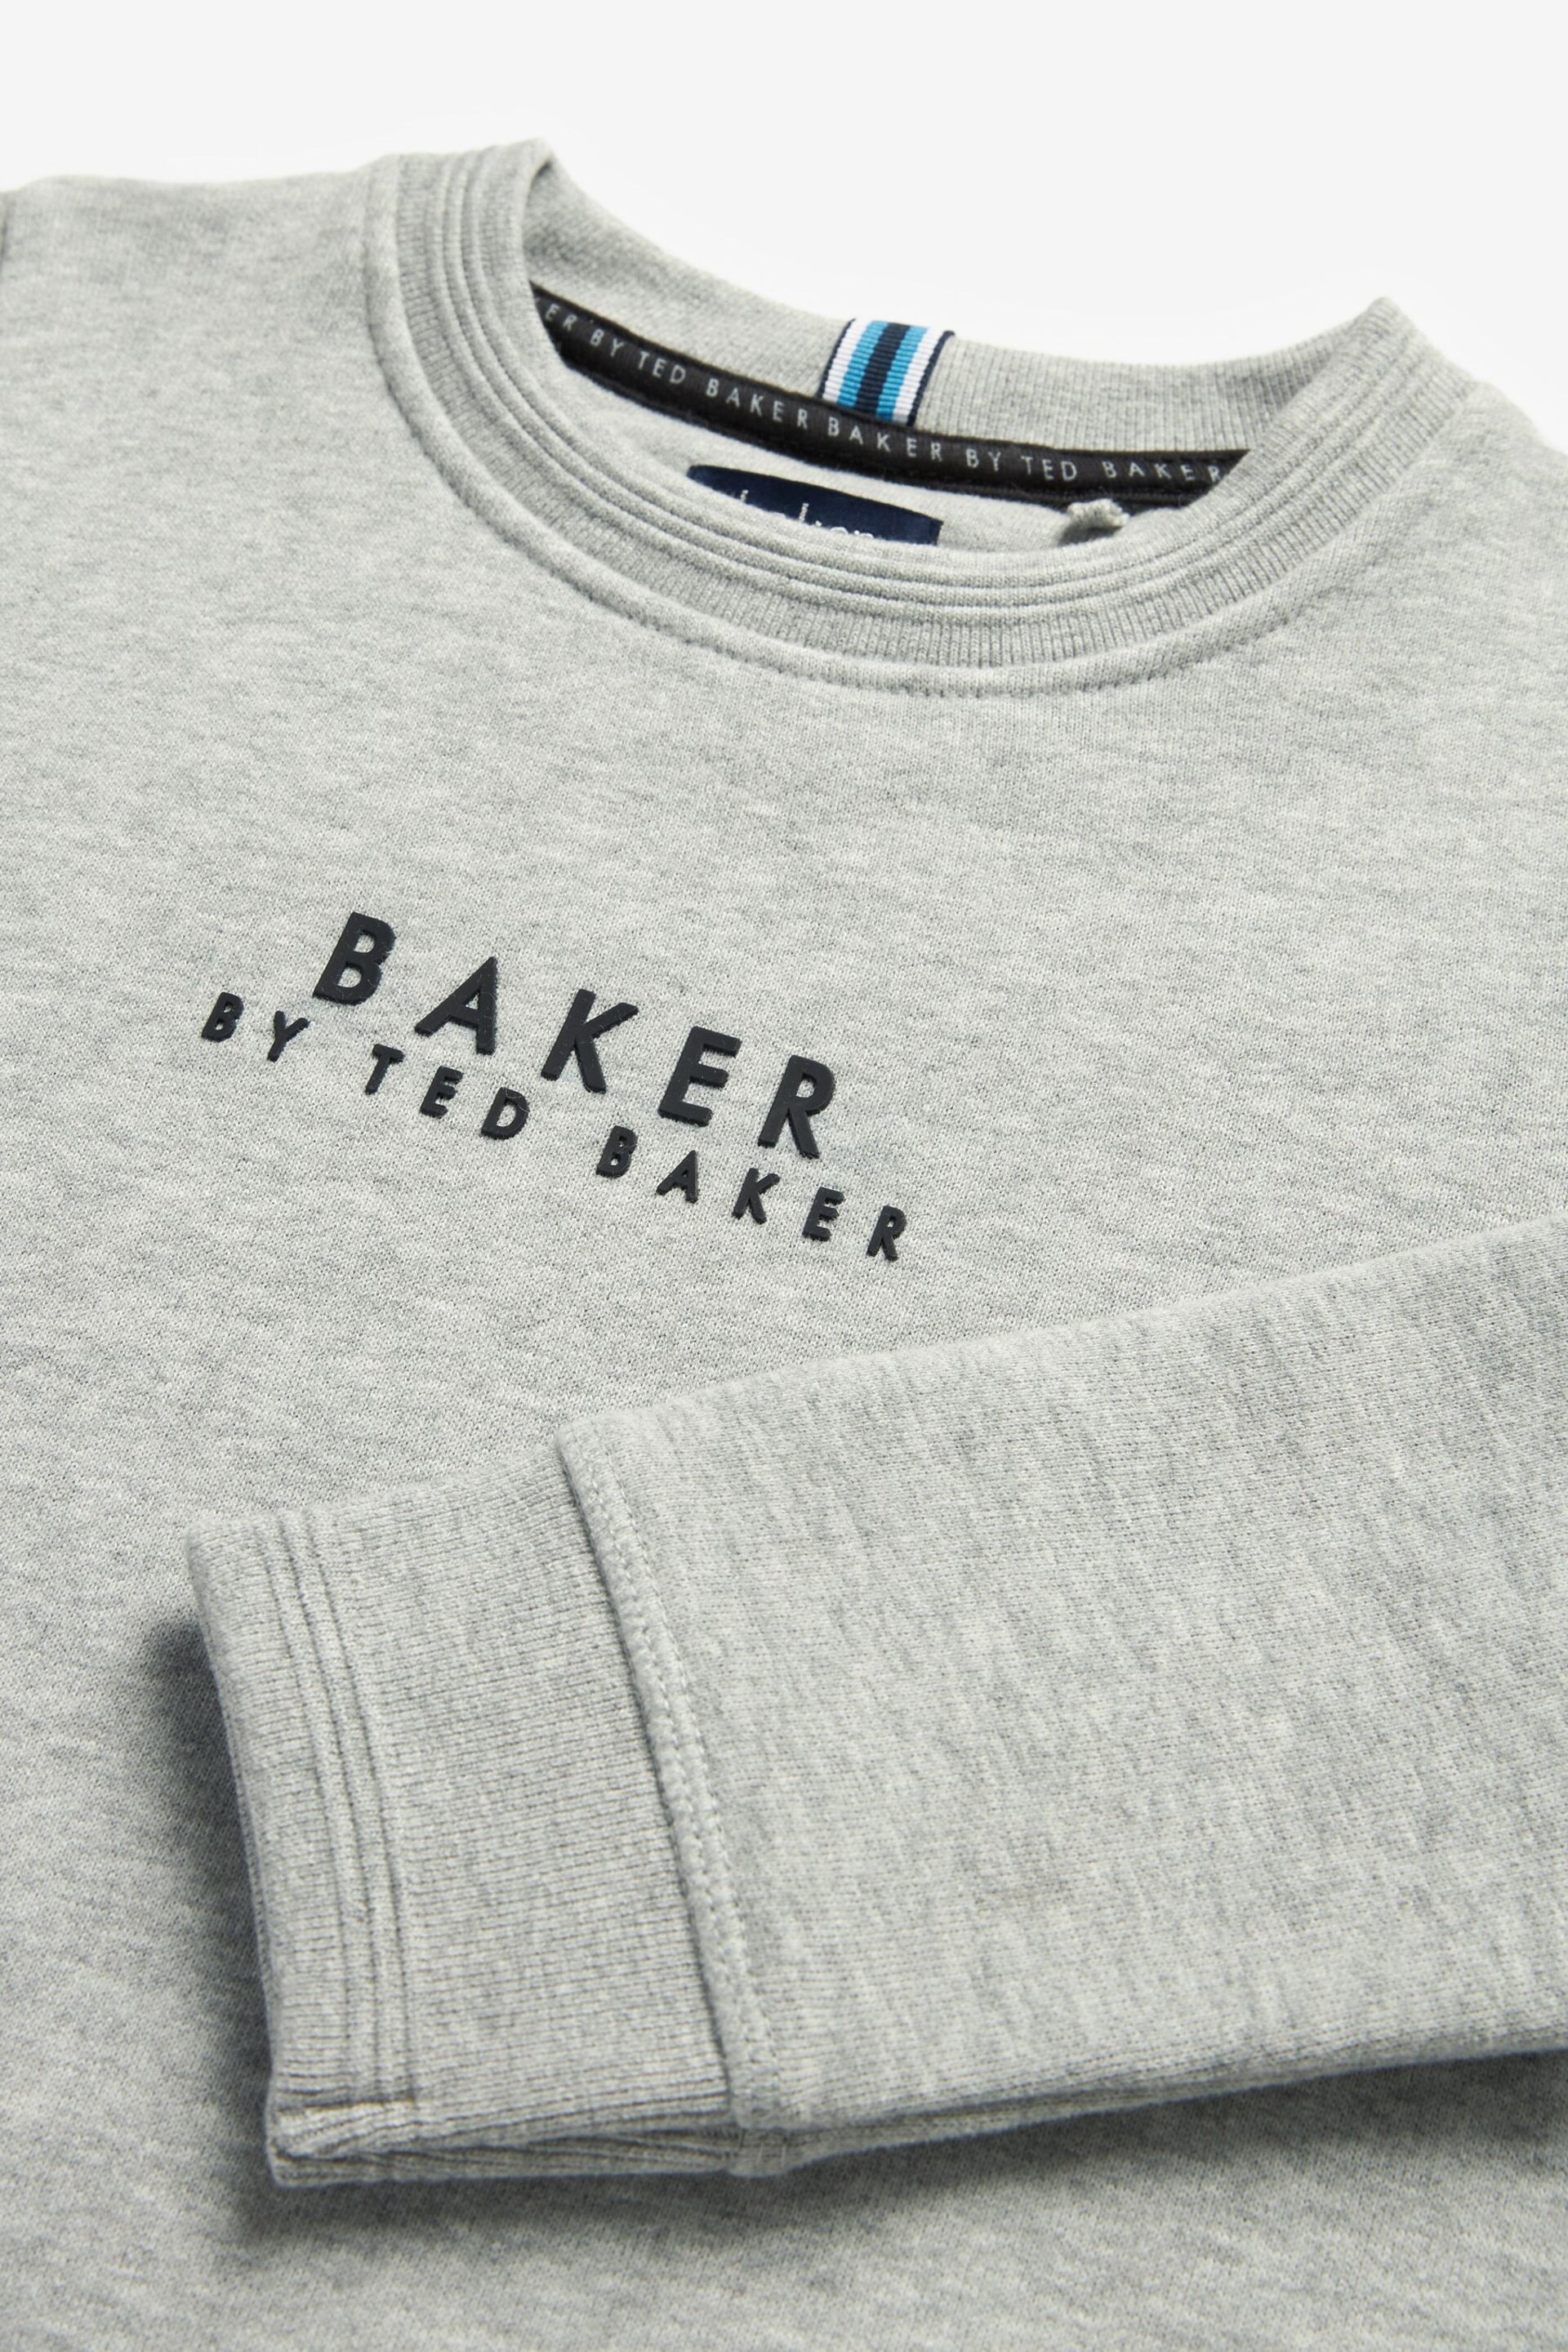 Baker by Ted Baker Sweatshirt - Image 8 of 8